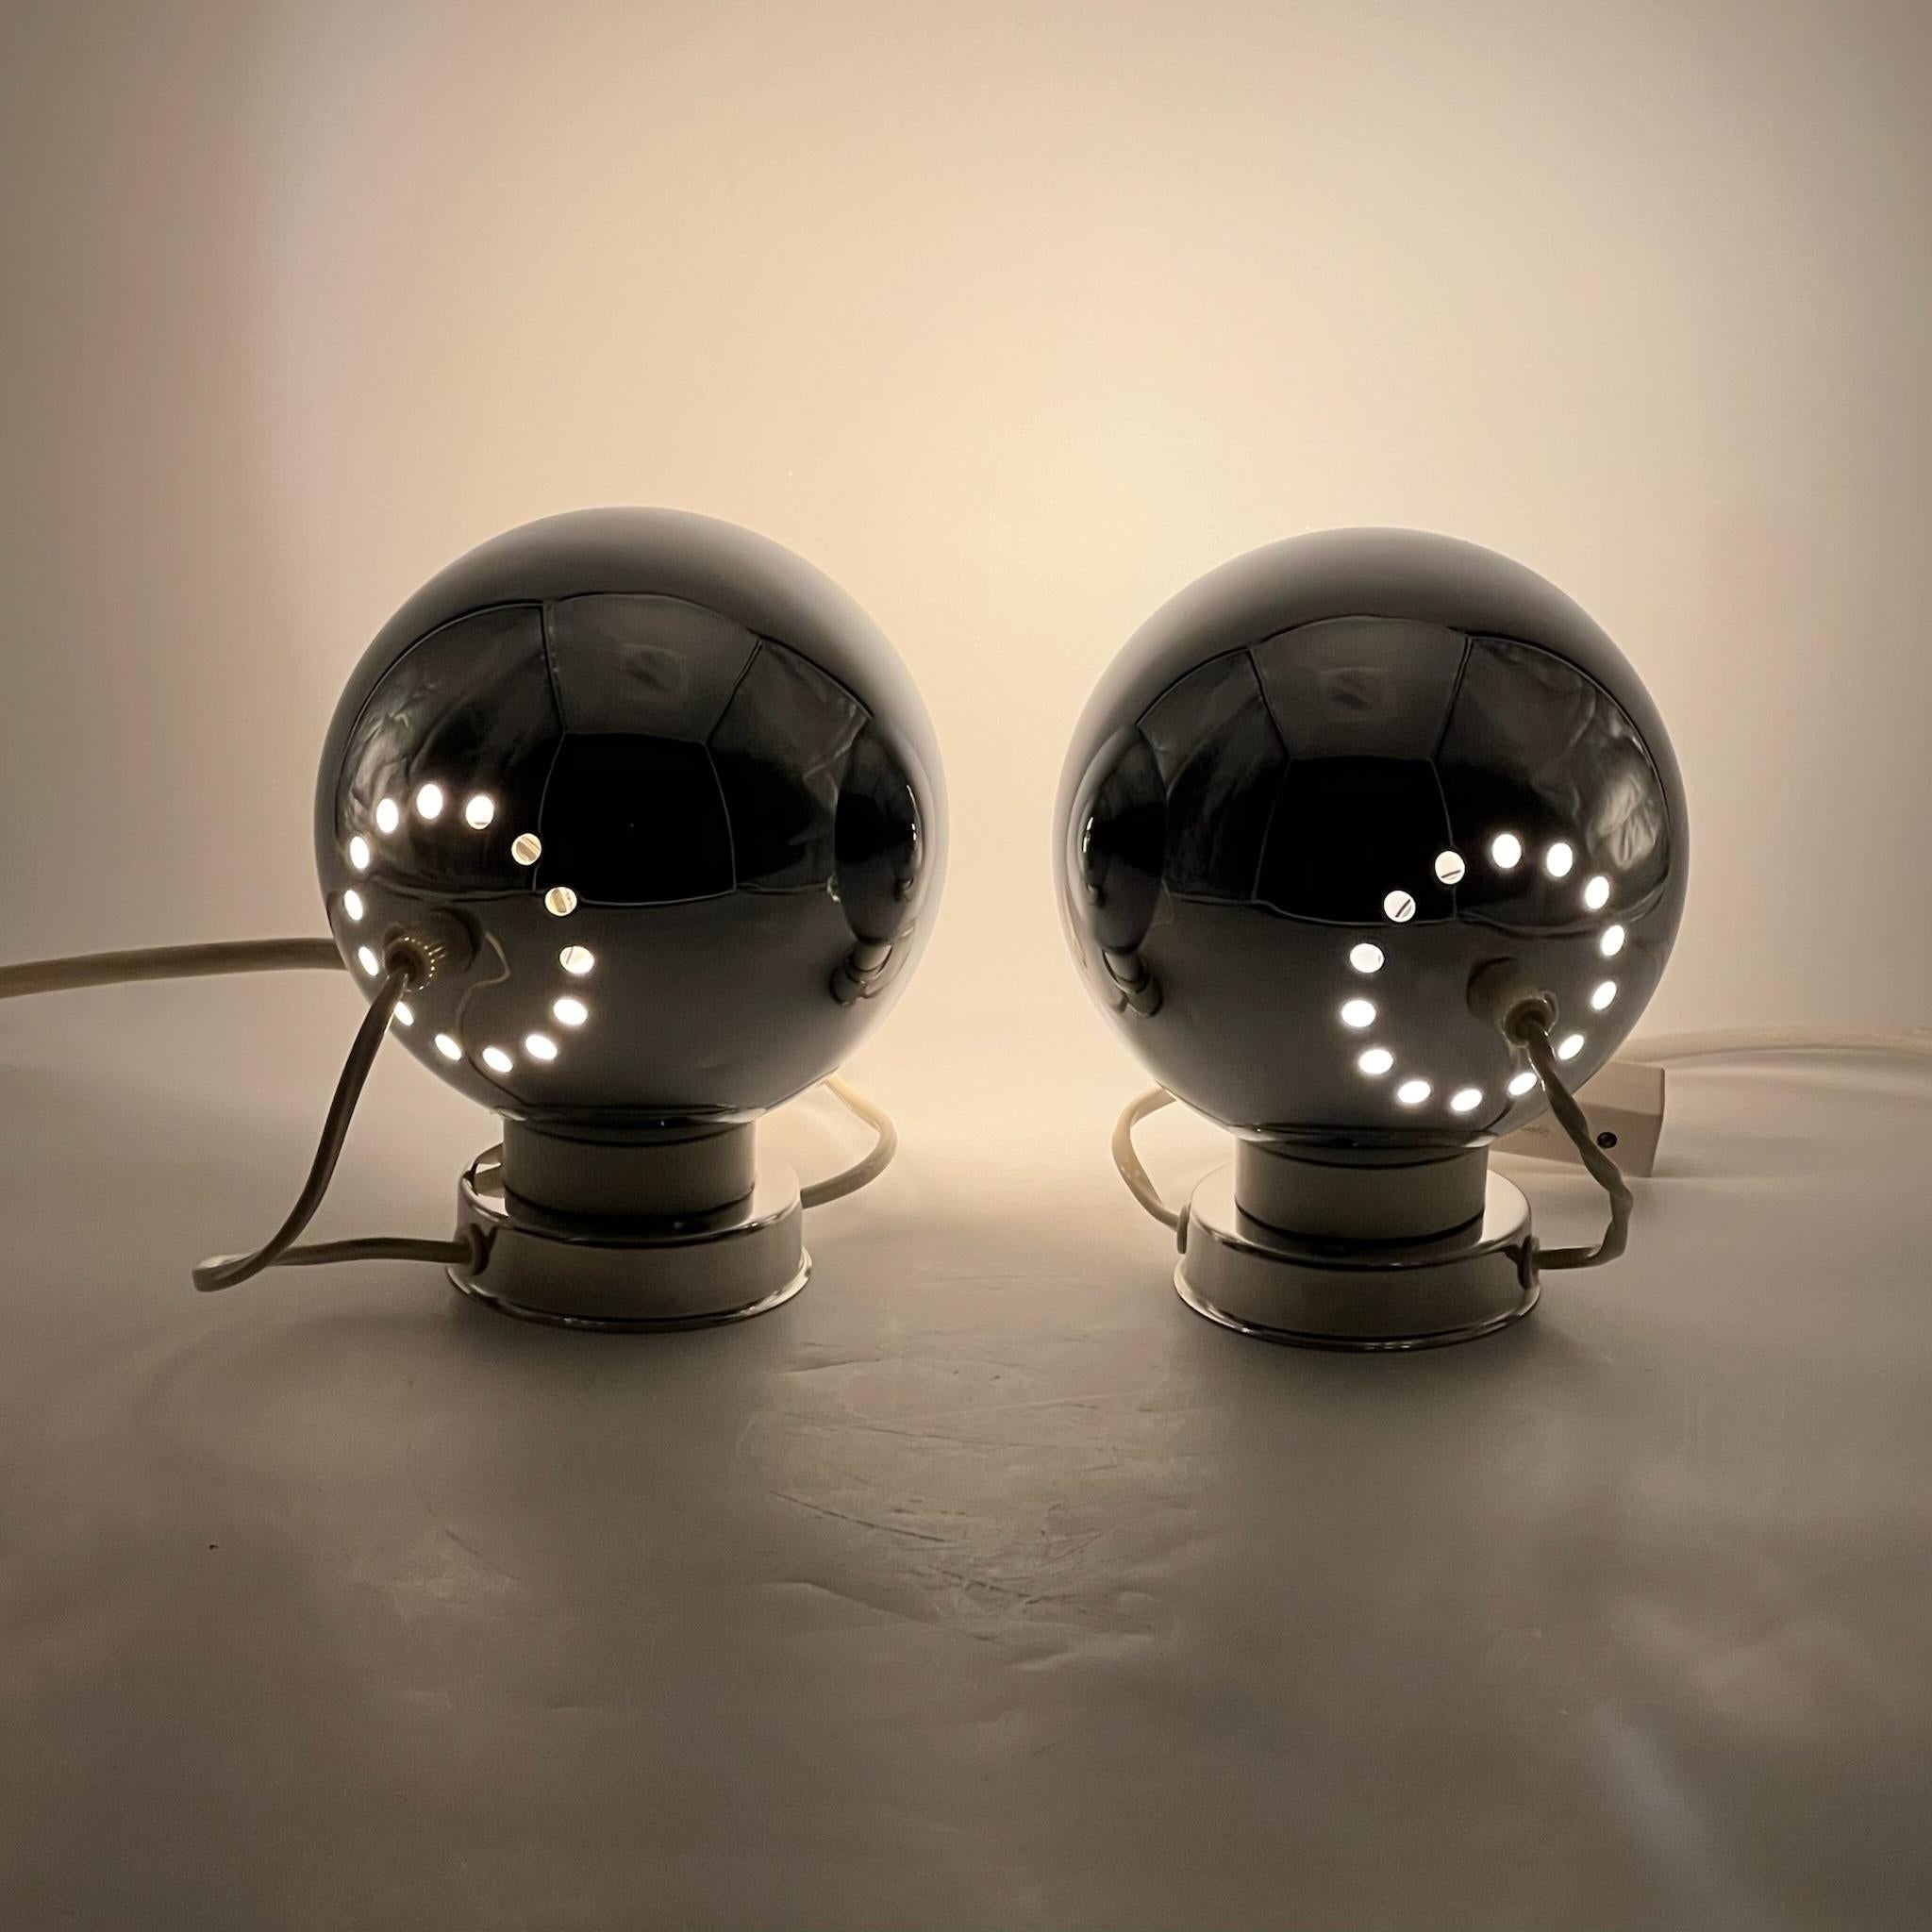 Ikonische Reggiani-Lampen „Eyeball“ 60er Jahre - Paar Vintage-Meisterwerke - 2er-Set (Metall)